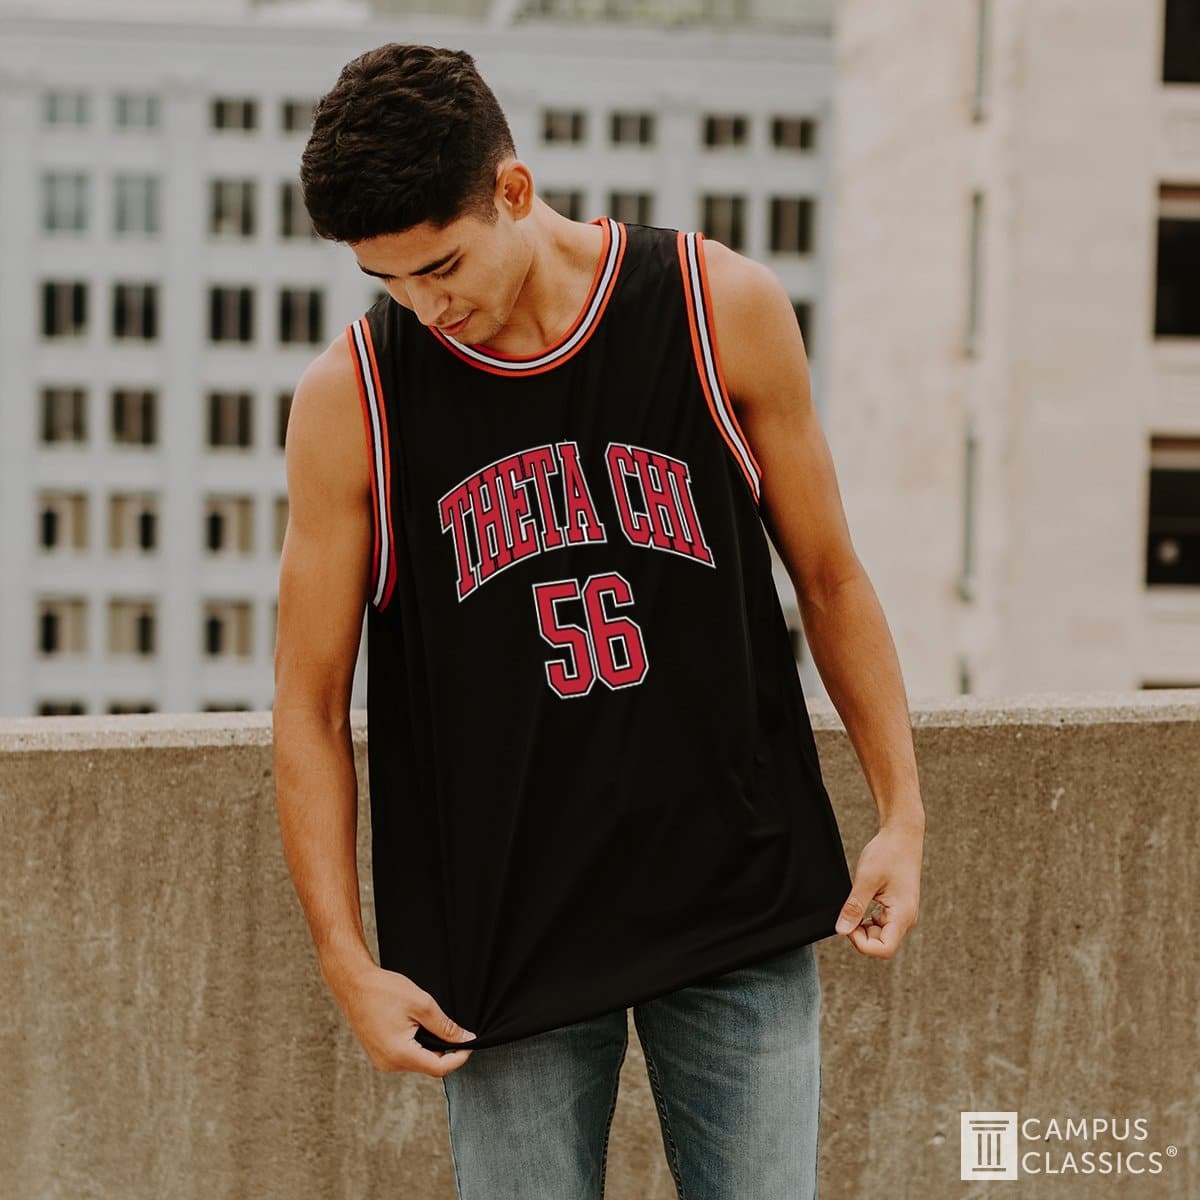 Sigma Nu Black Basketball Jersey | Sigma Nu | Shirts > Jerseys